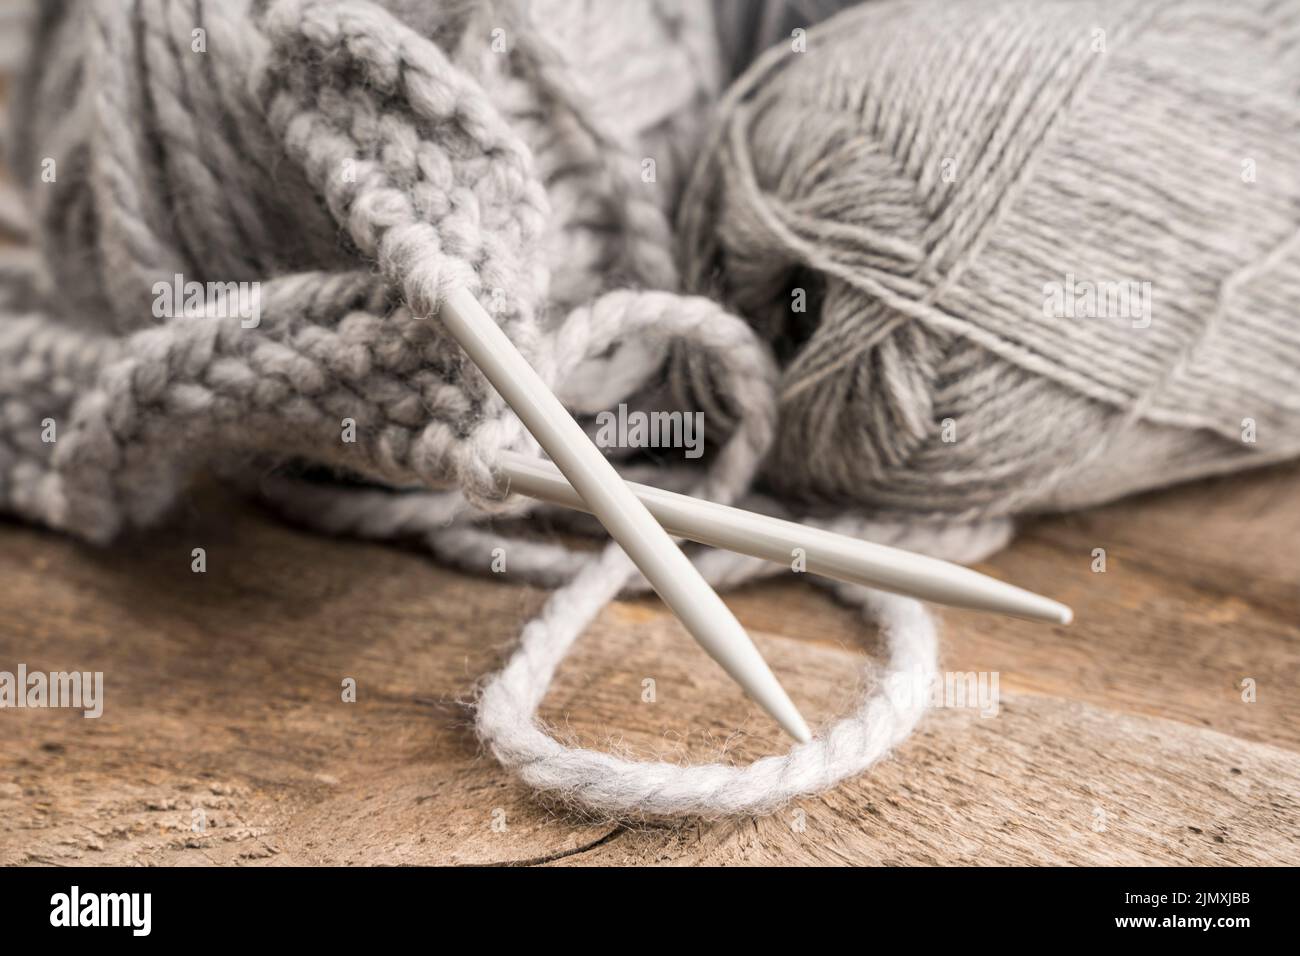 650+ Circular Knitting Needles Stock Photos, Pictures & Royalty